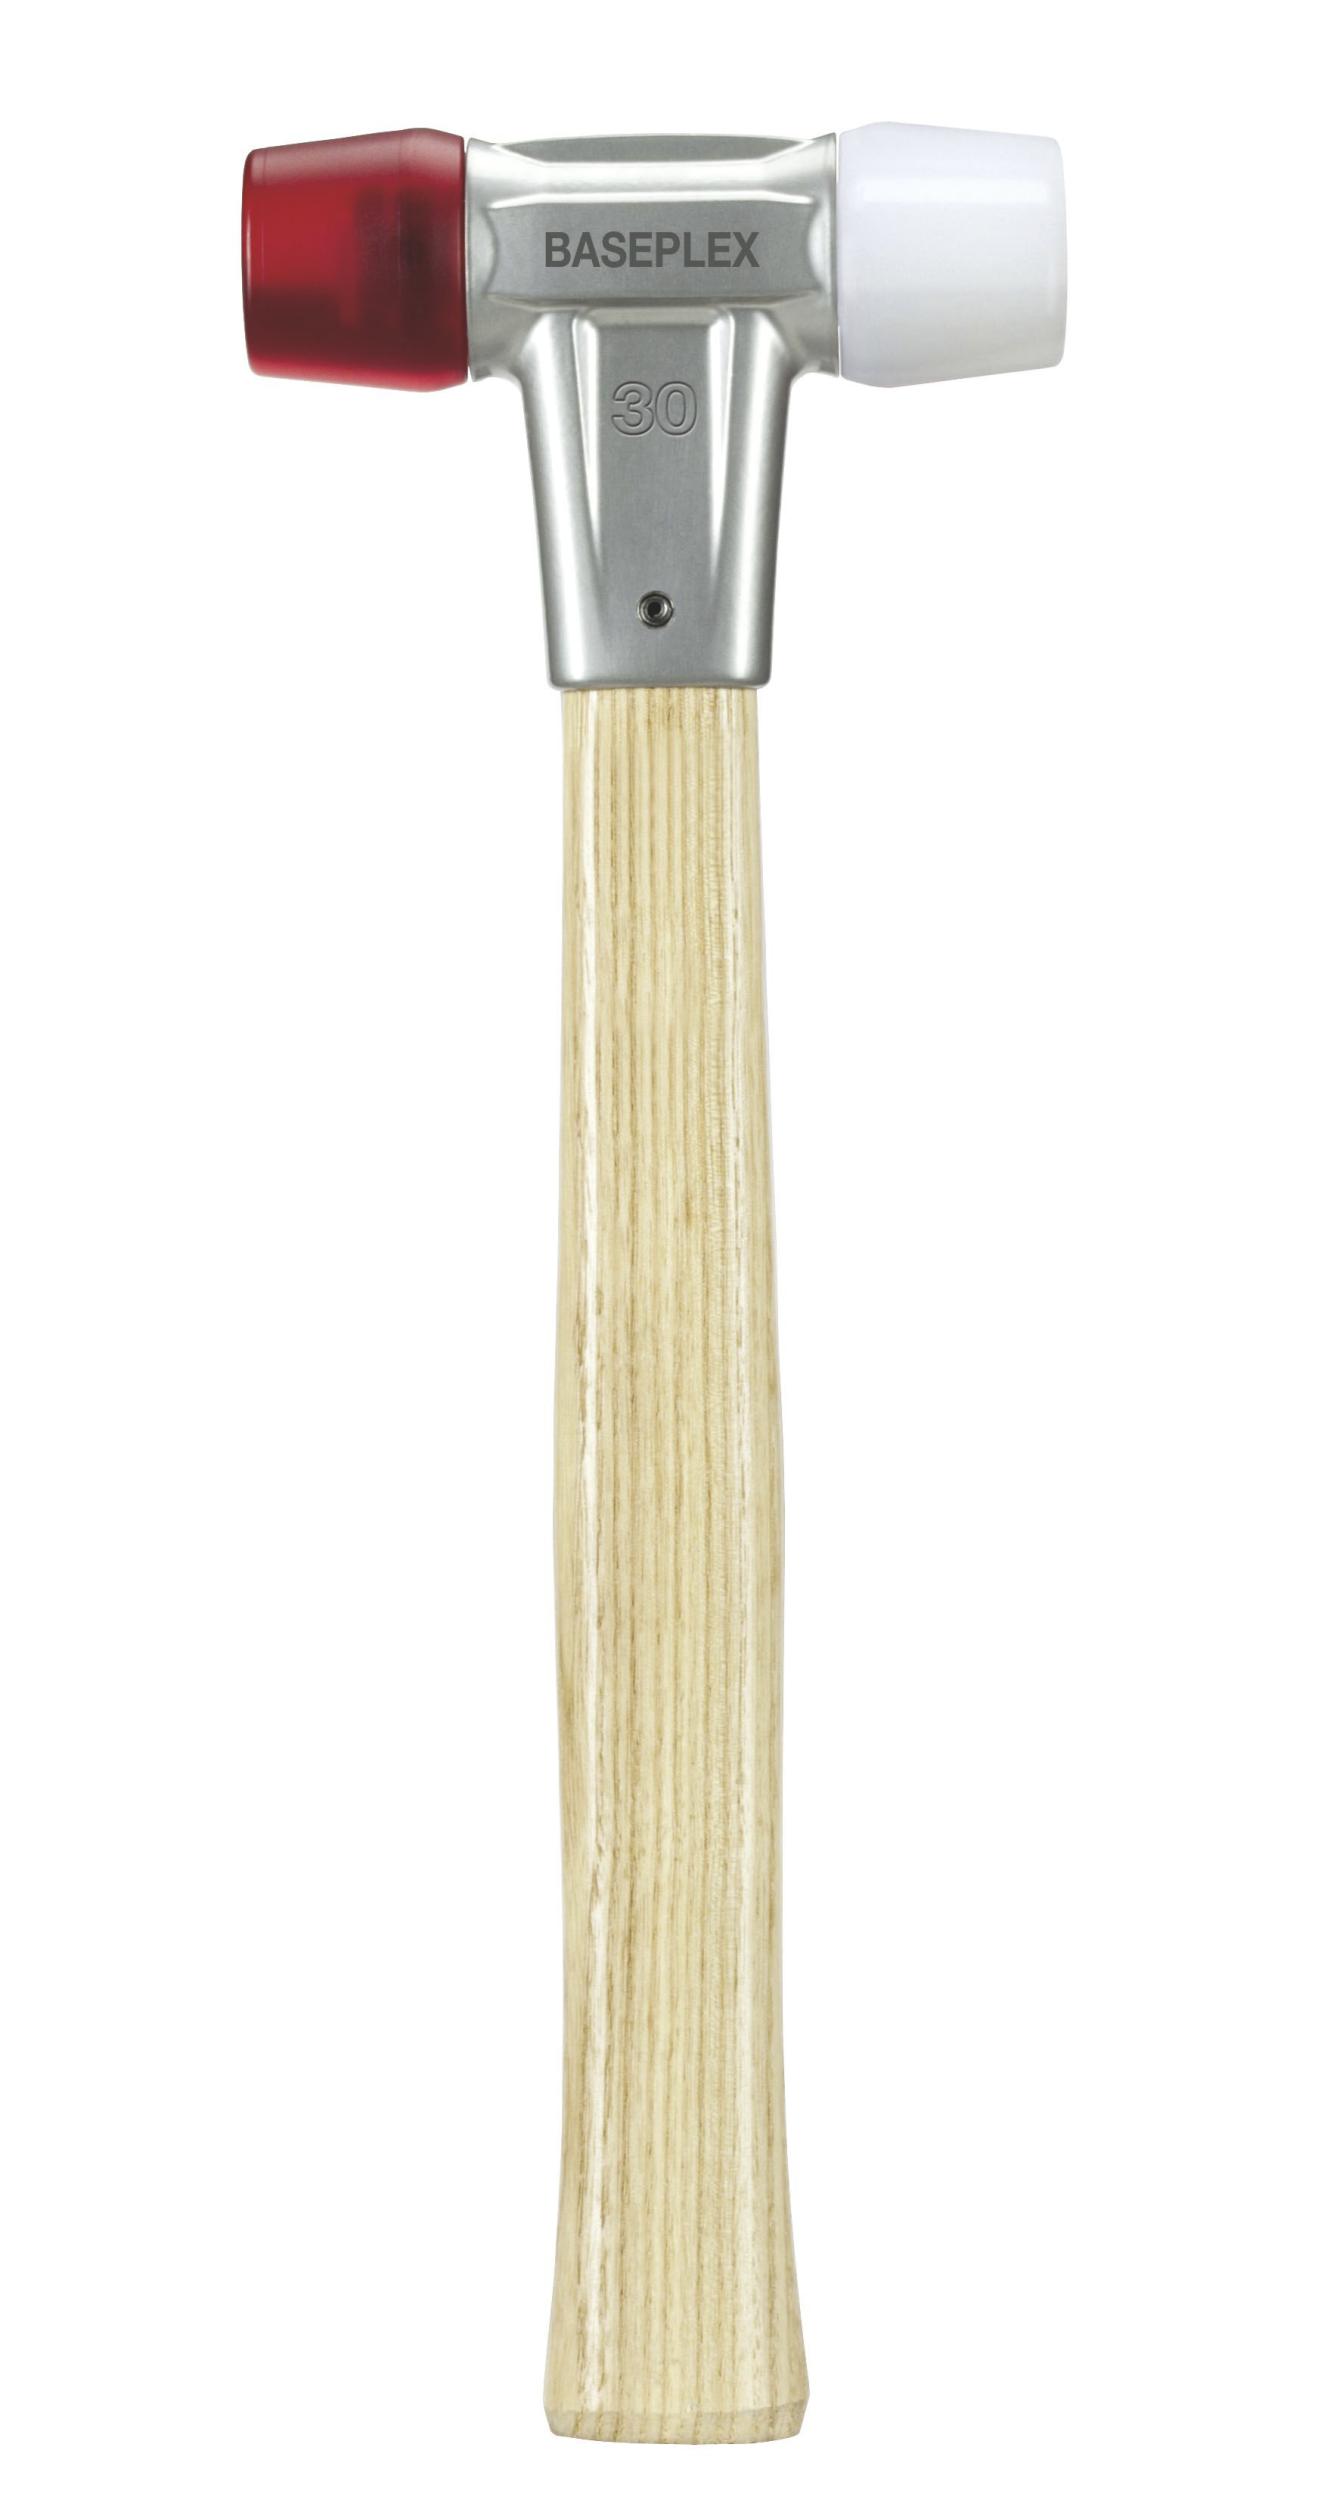 Halder Schonhammer 30 mm, ca. 370 g, Gesamtlänge 280 mm, Kopflänge 95 mm